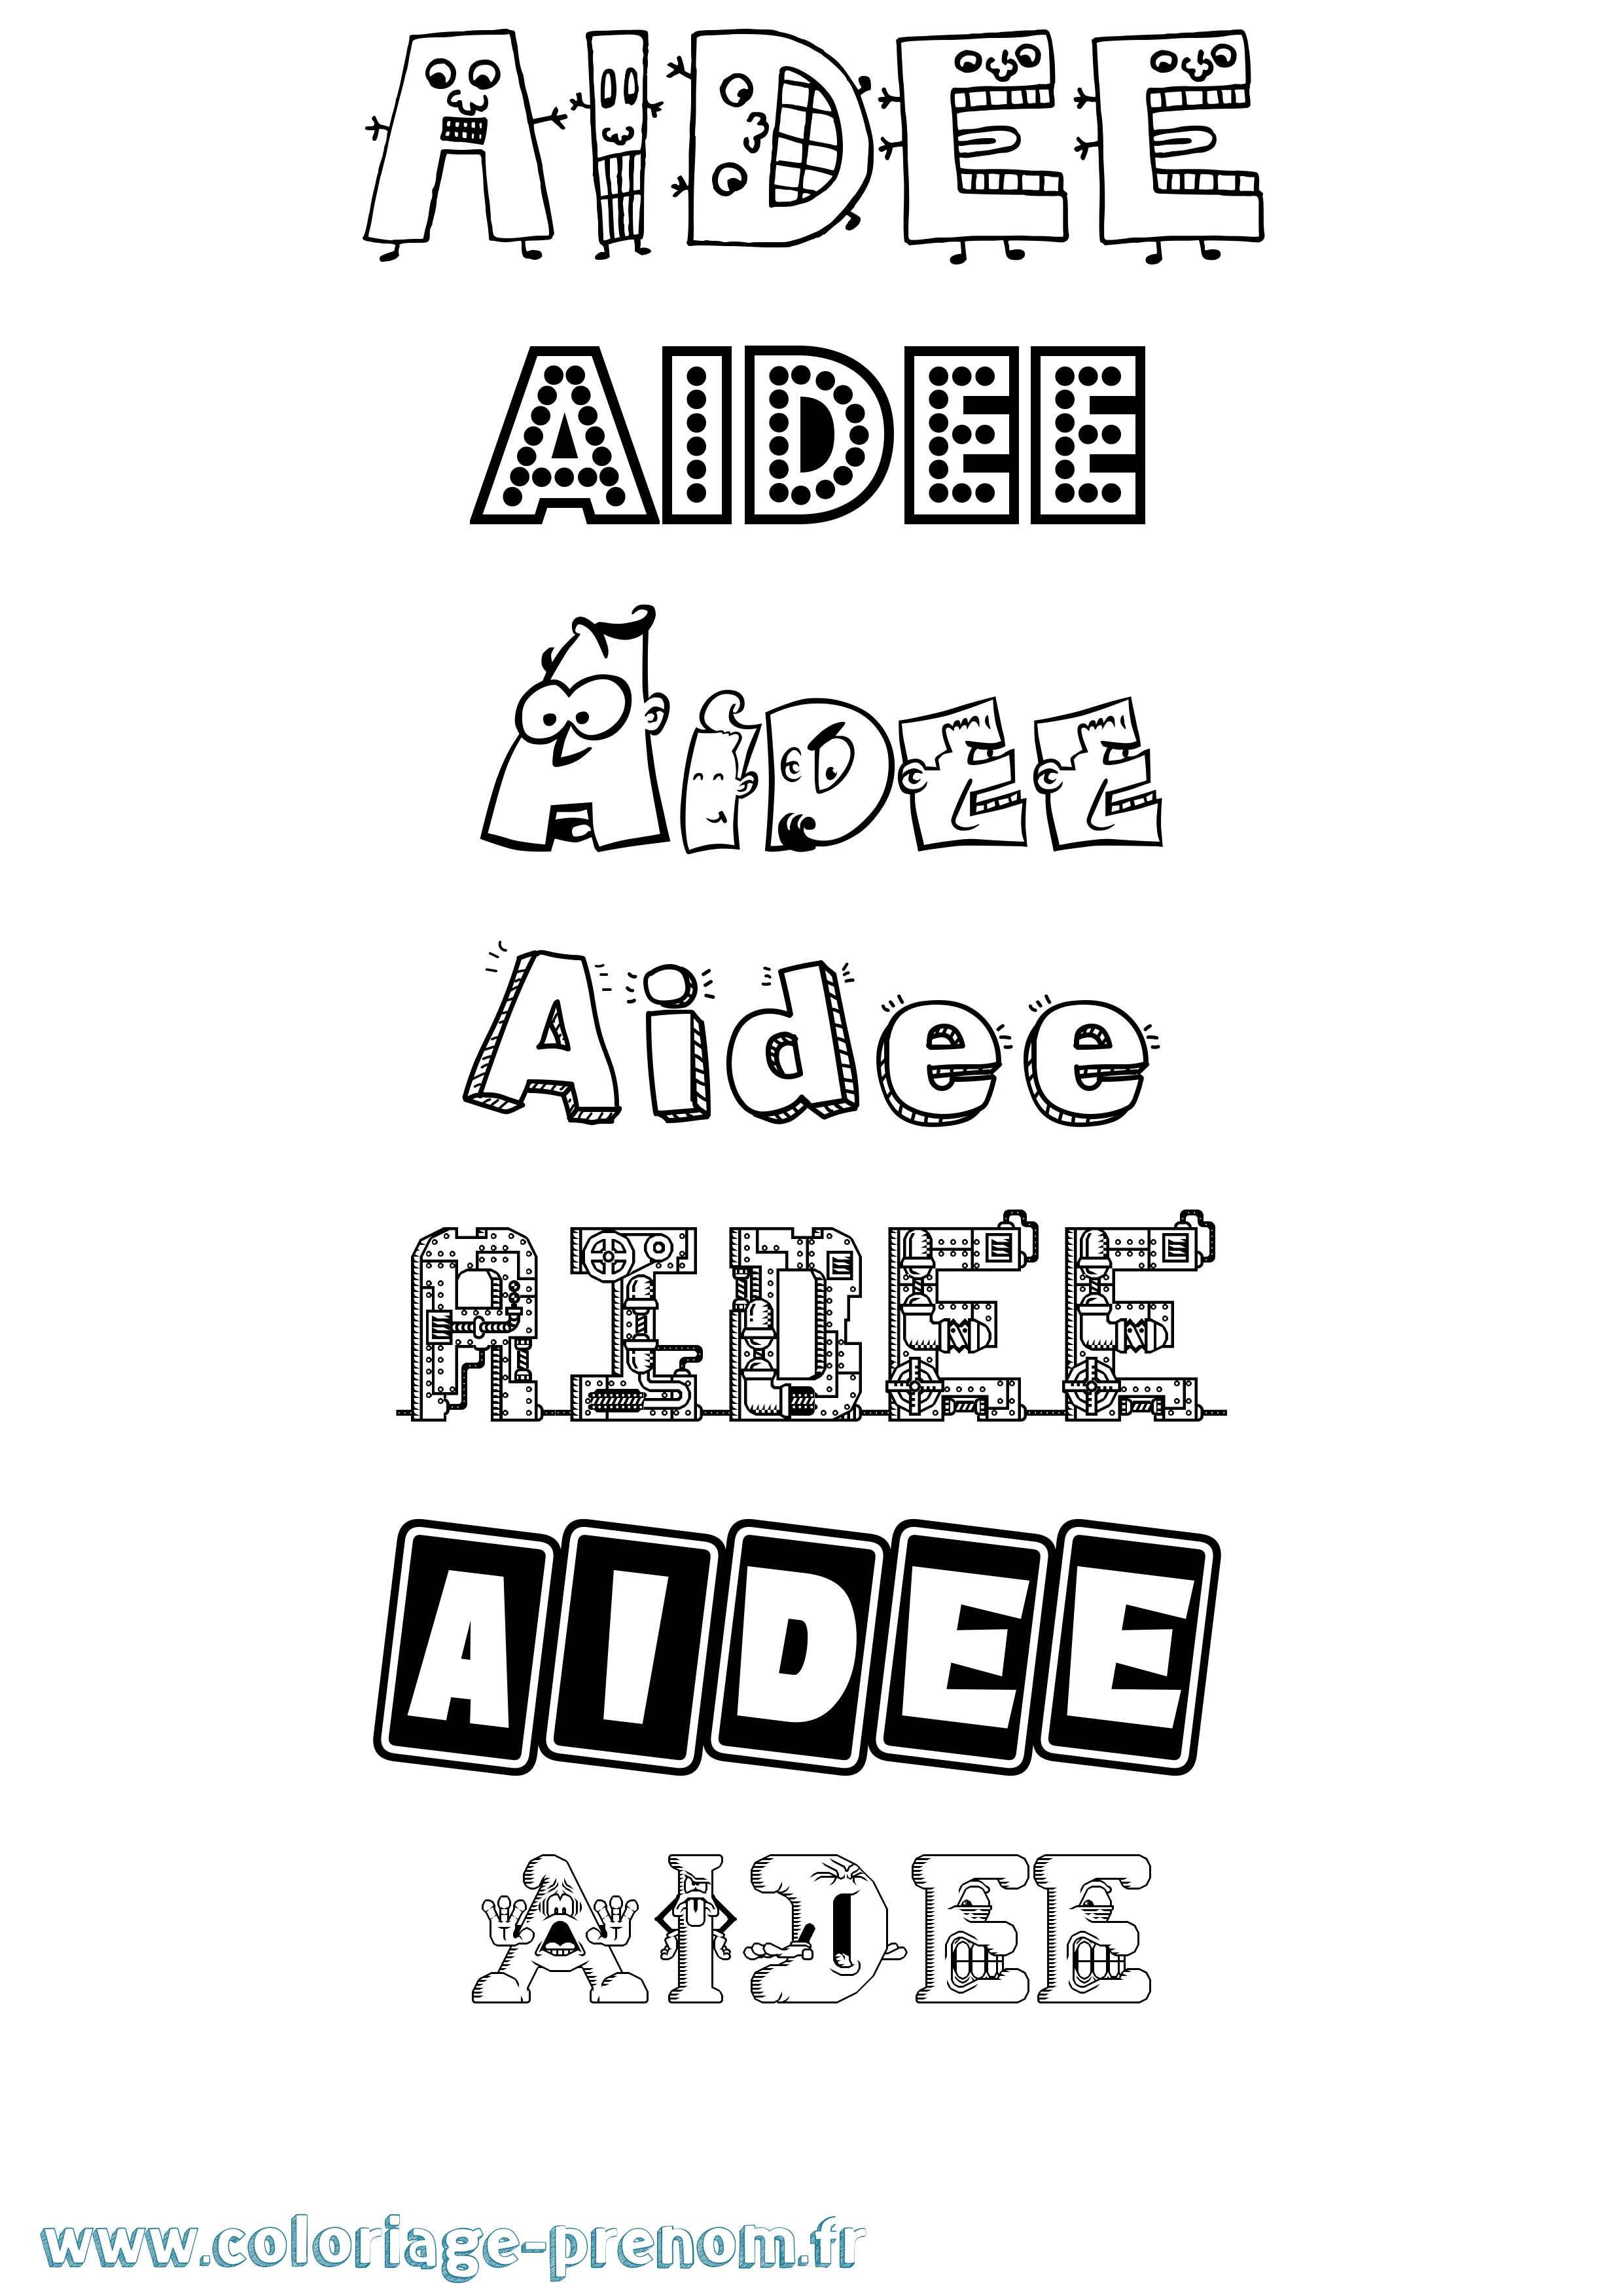 Coloriage prénom Aidee Fun